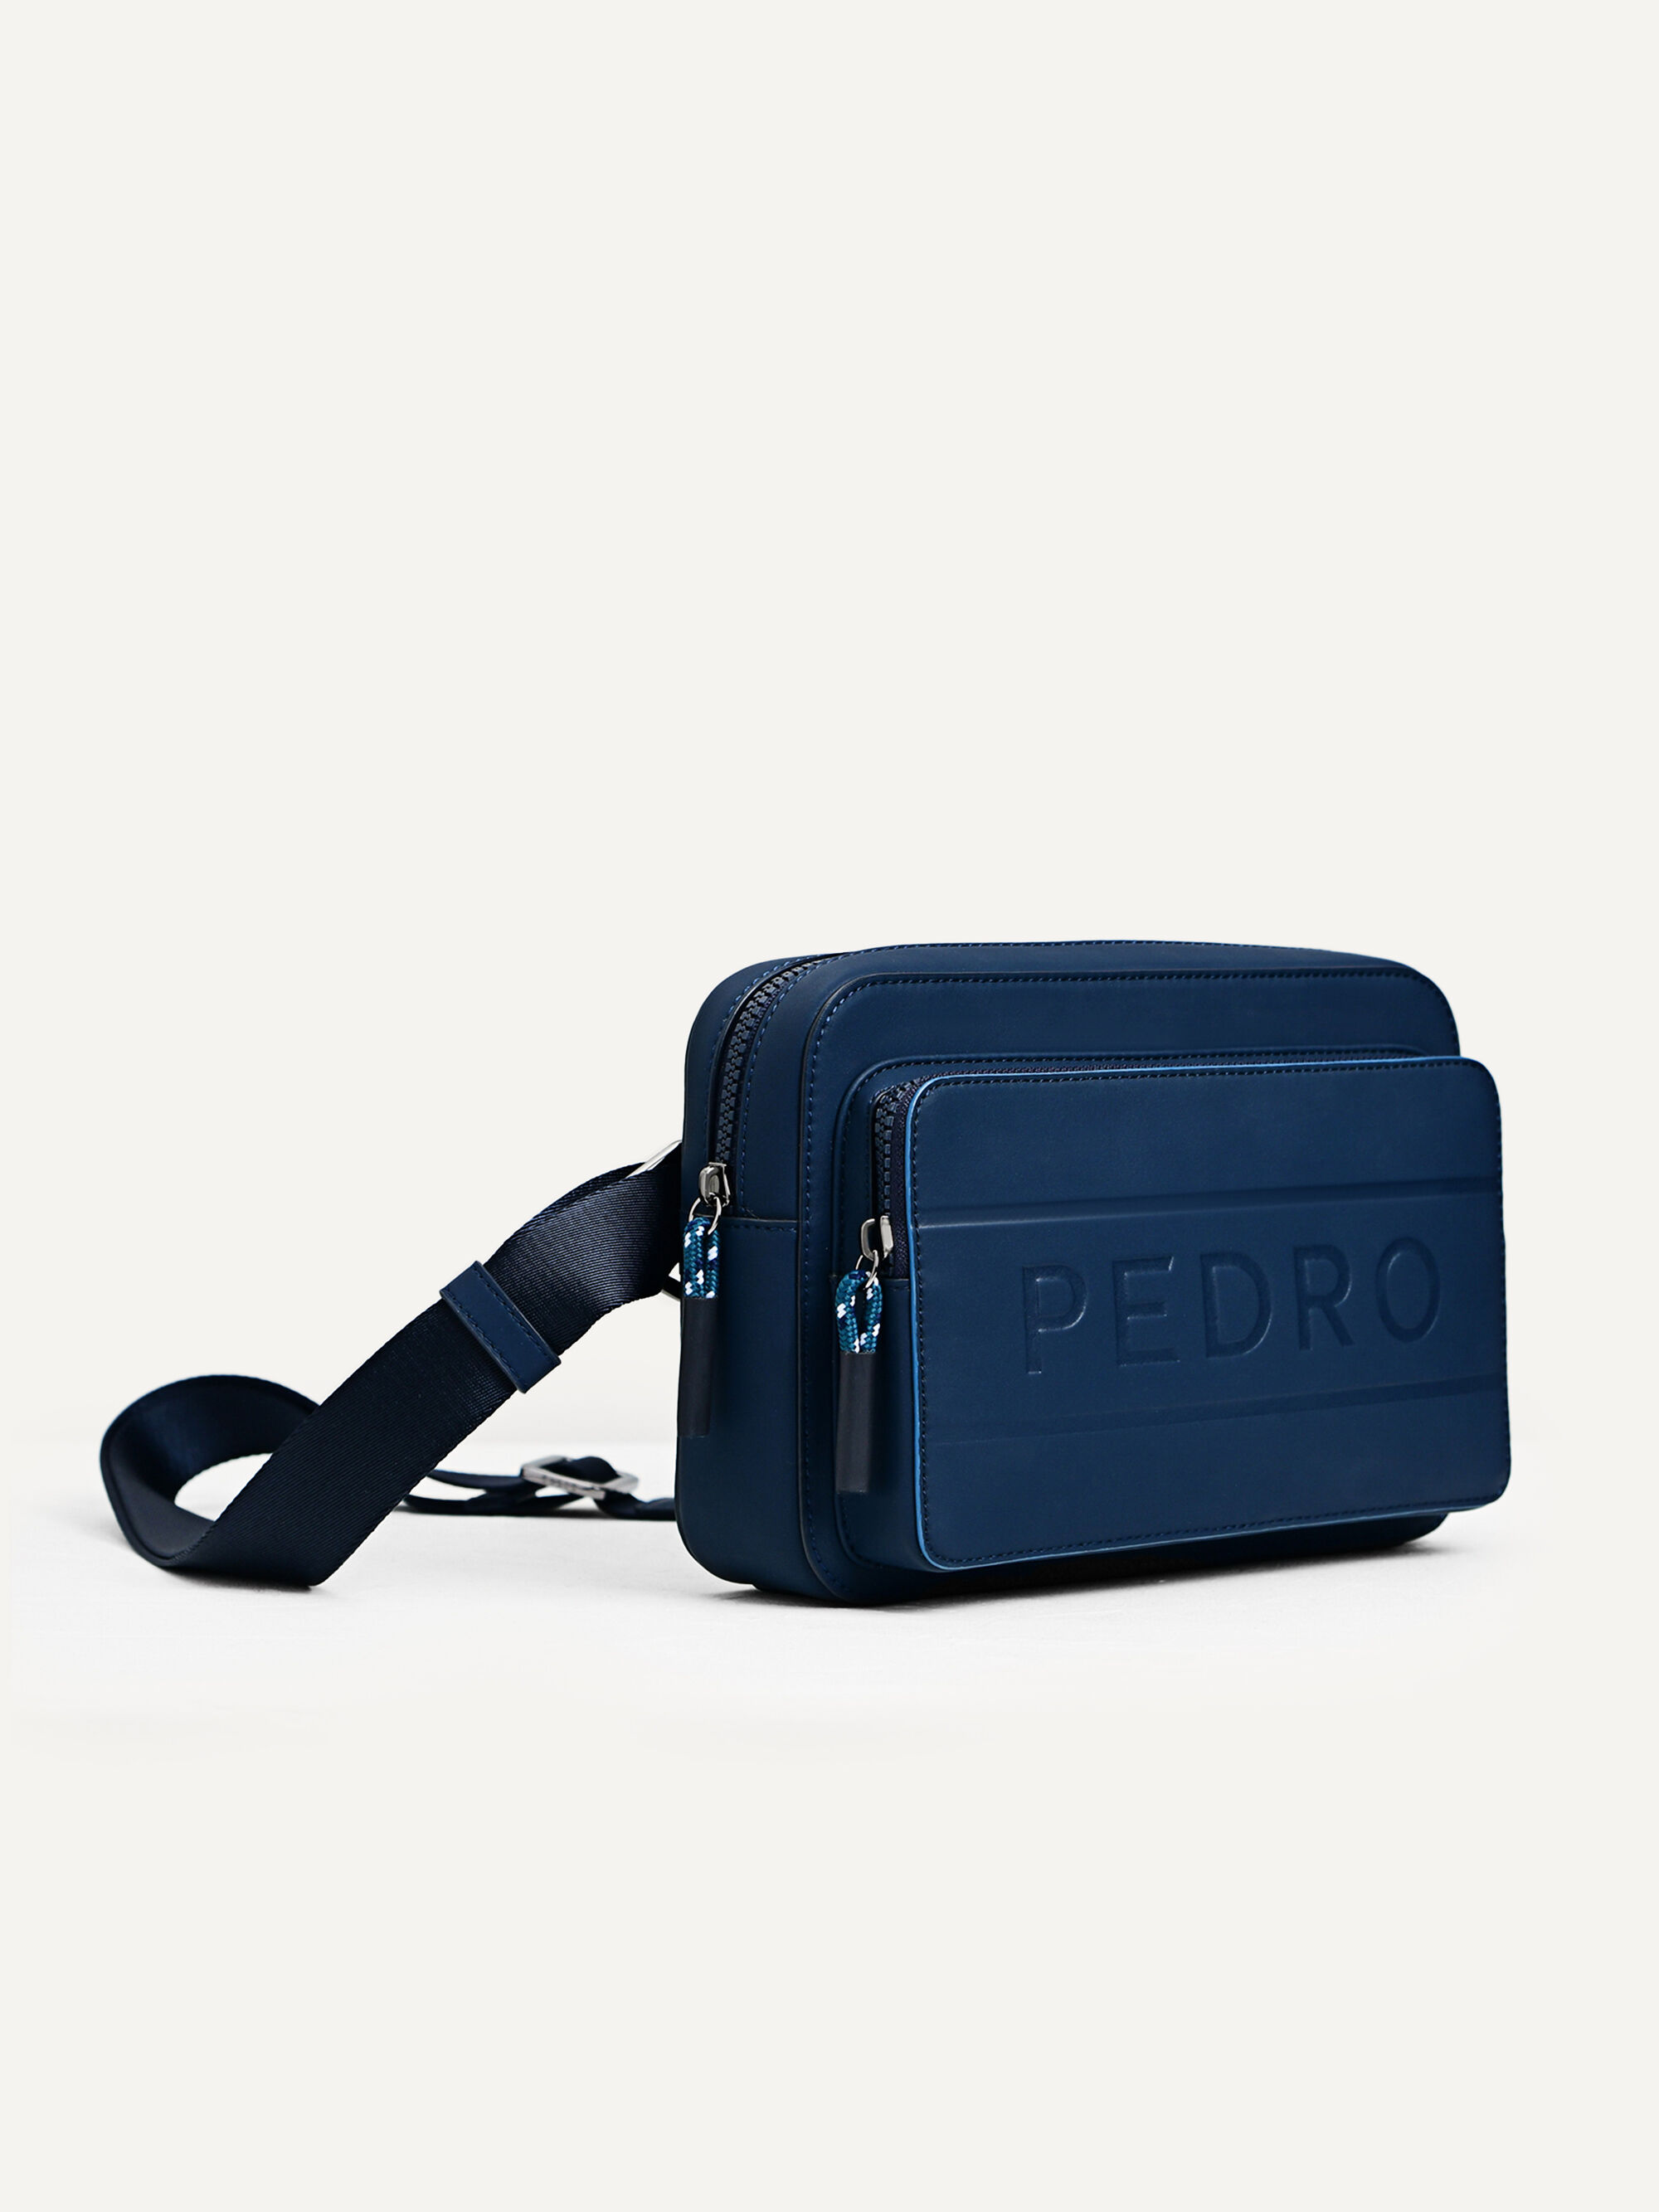 pedro sling bags｜TikTok Search